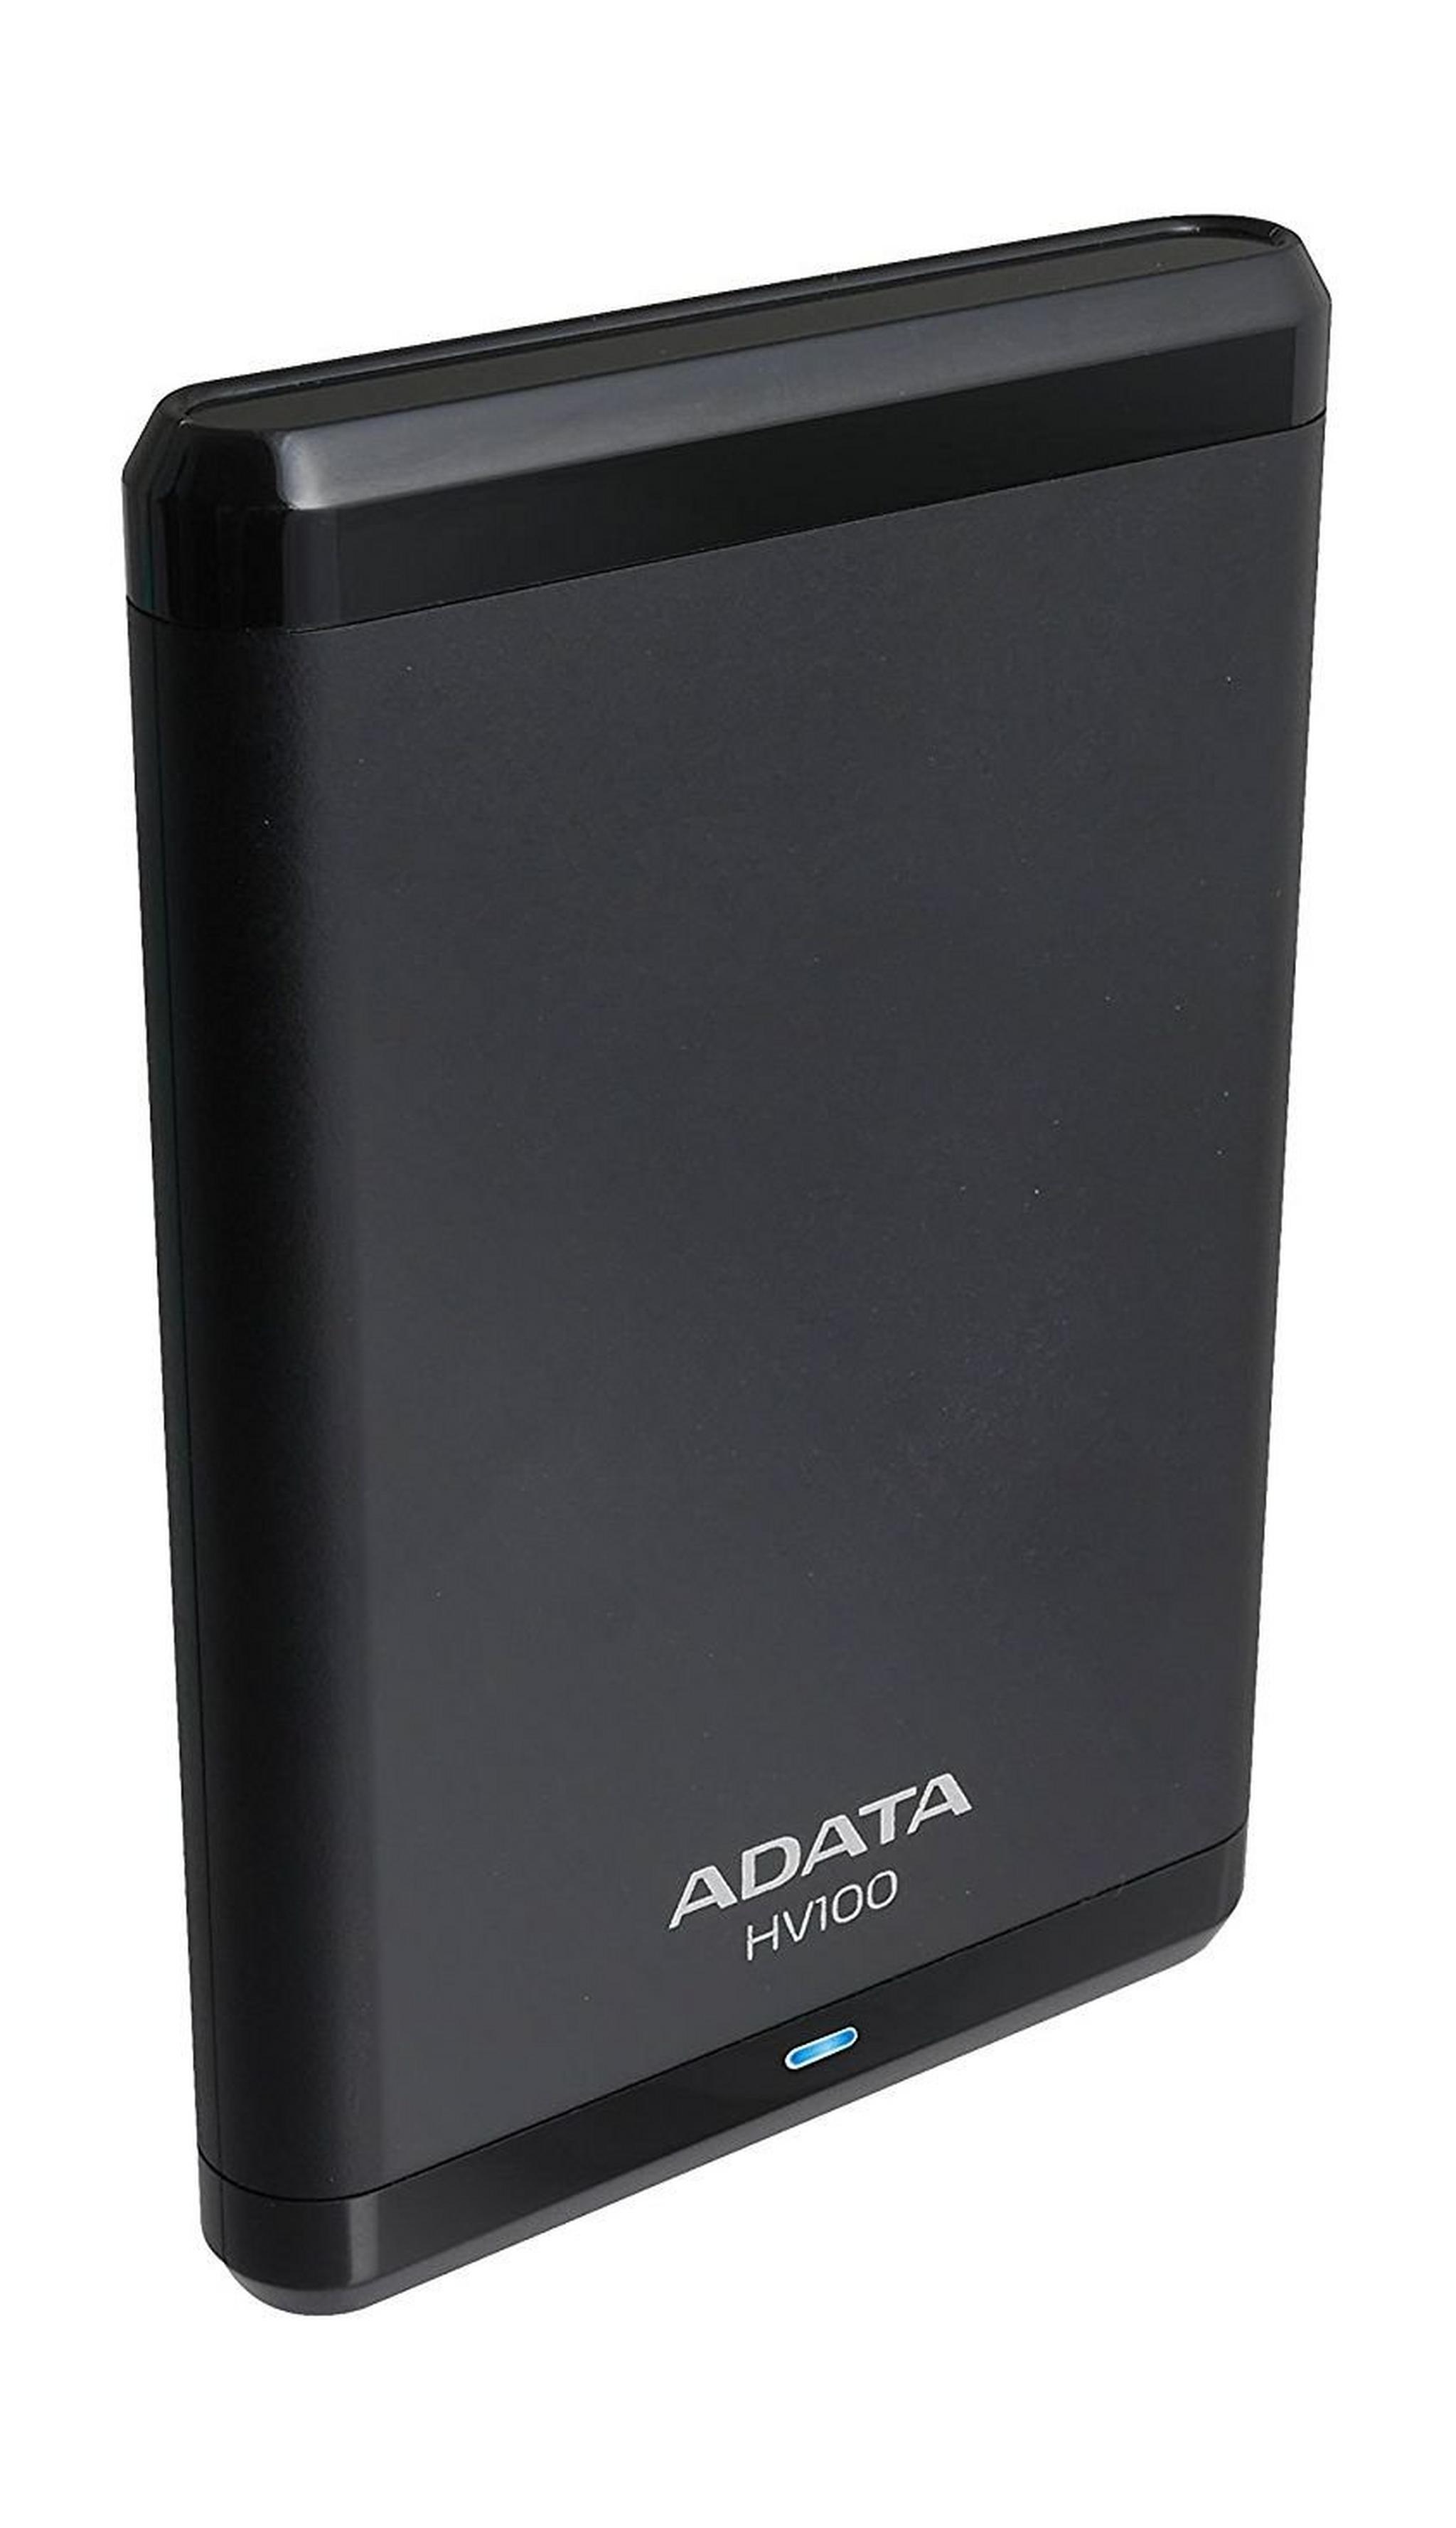 ADATA HV100 Portable External Hard Drive - 1TB